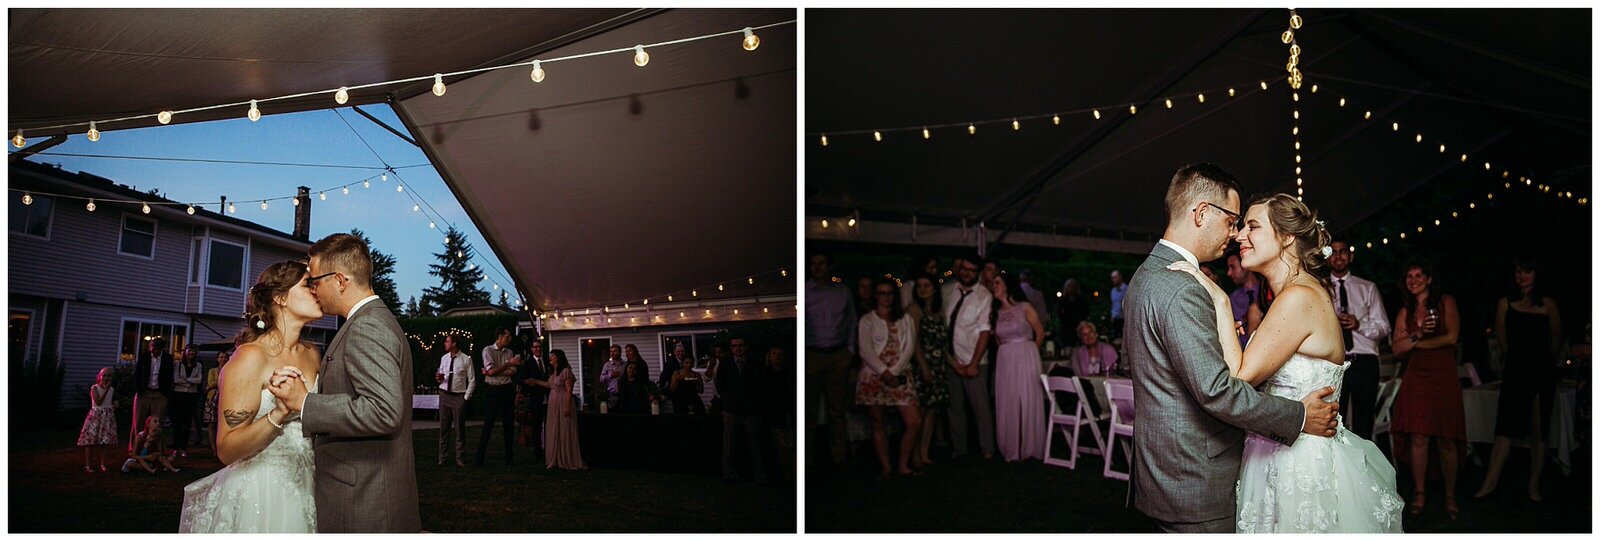 reception+backyard+wedding+fraser+valley+photos (49).jpg